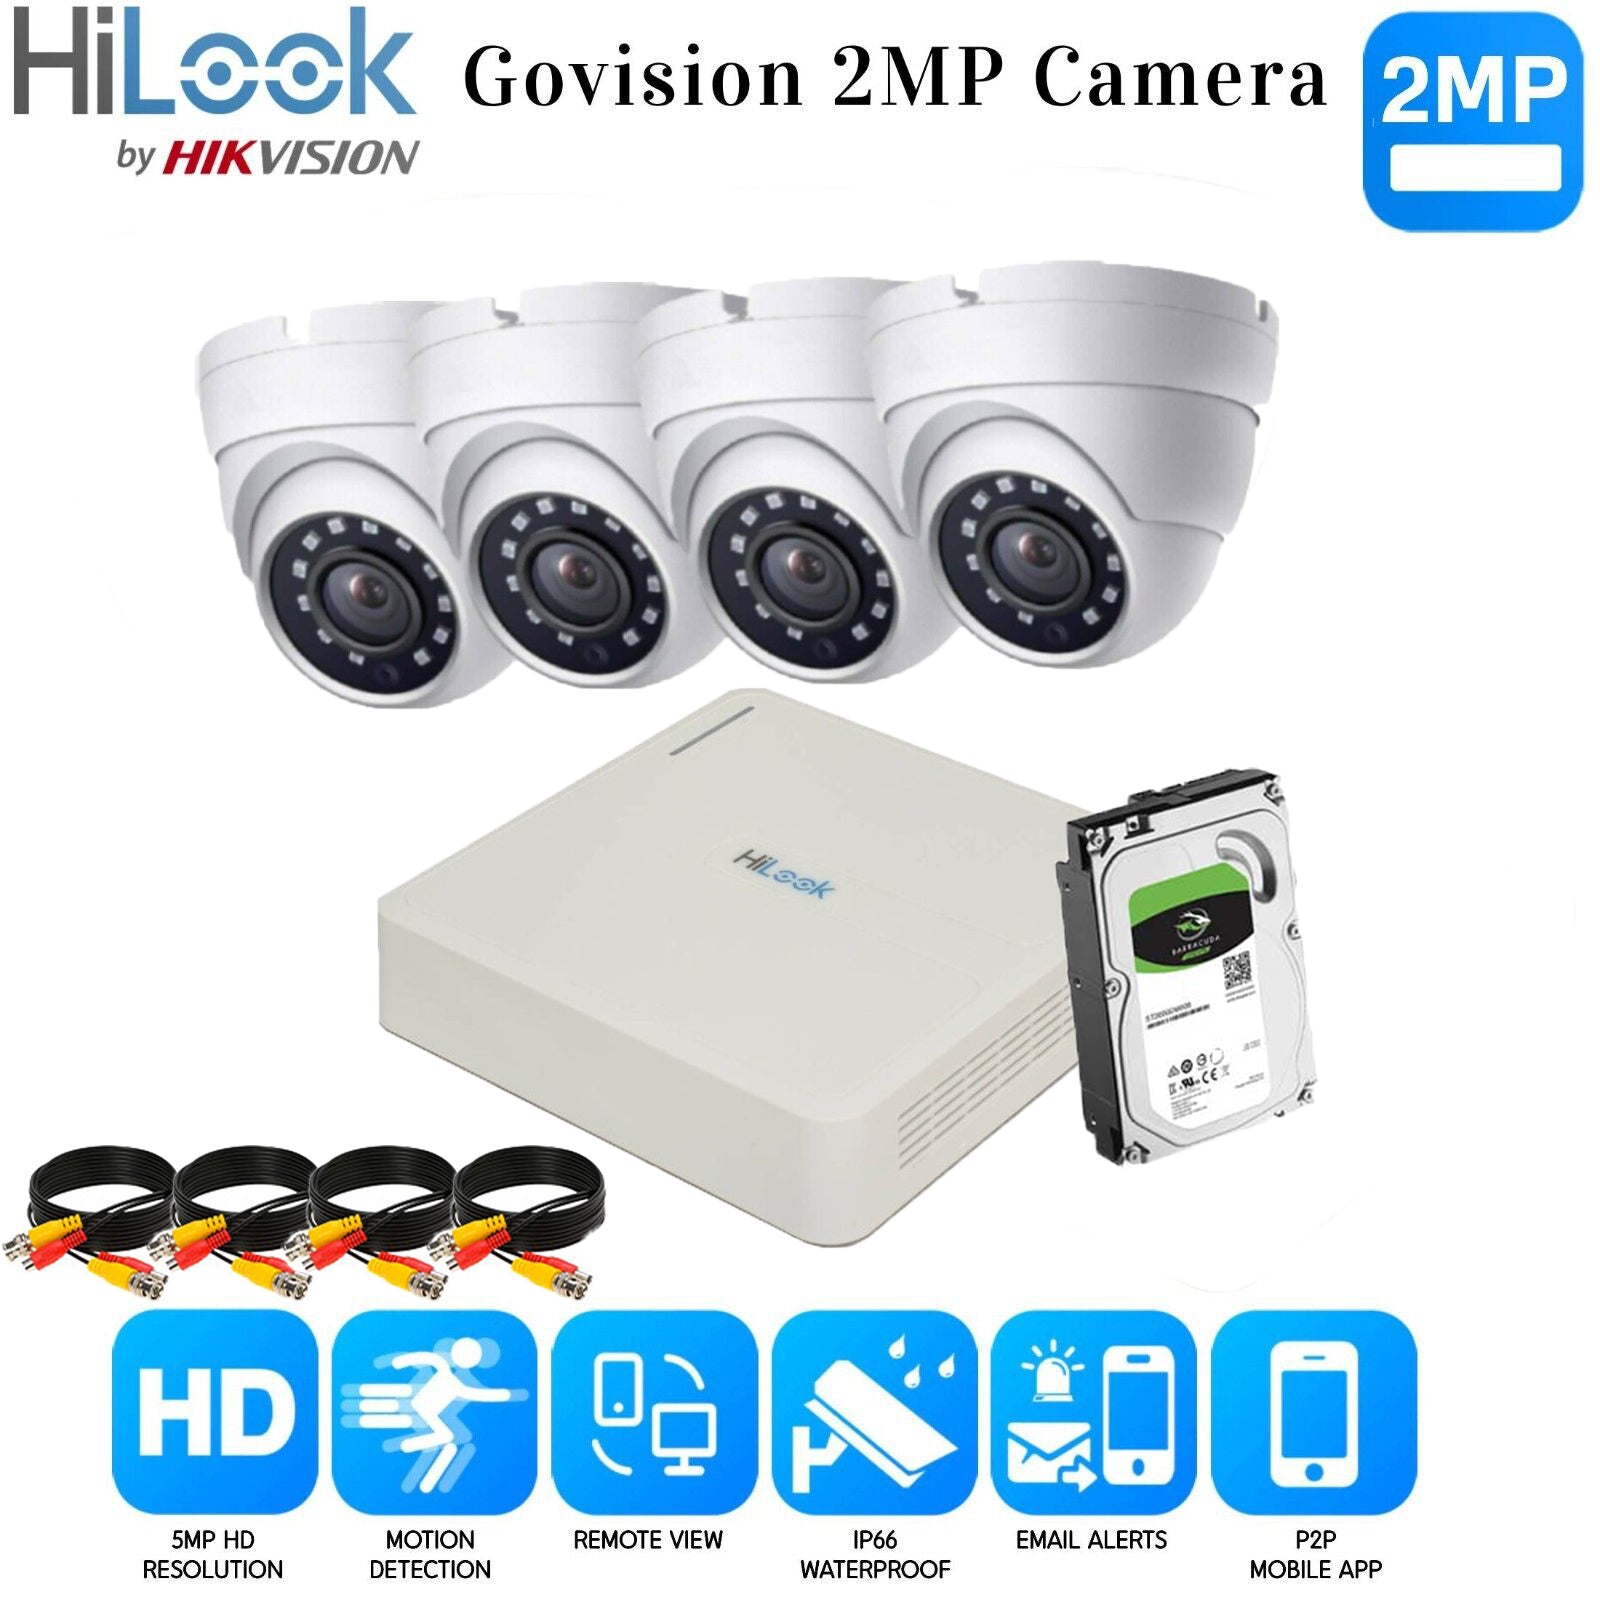 <img src="Hikvision Home Outdoor CCTV Security Camera System Kit HD 1080P 4CH DVR IR NIGHT 4CH DVR 4xCameras (white) 2TB HDD.jpg" alt="Surveillance camera system ">